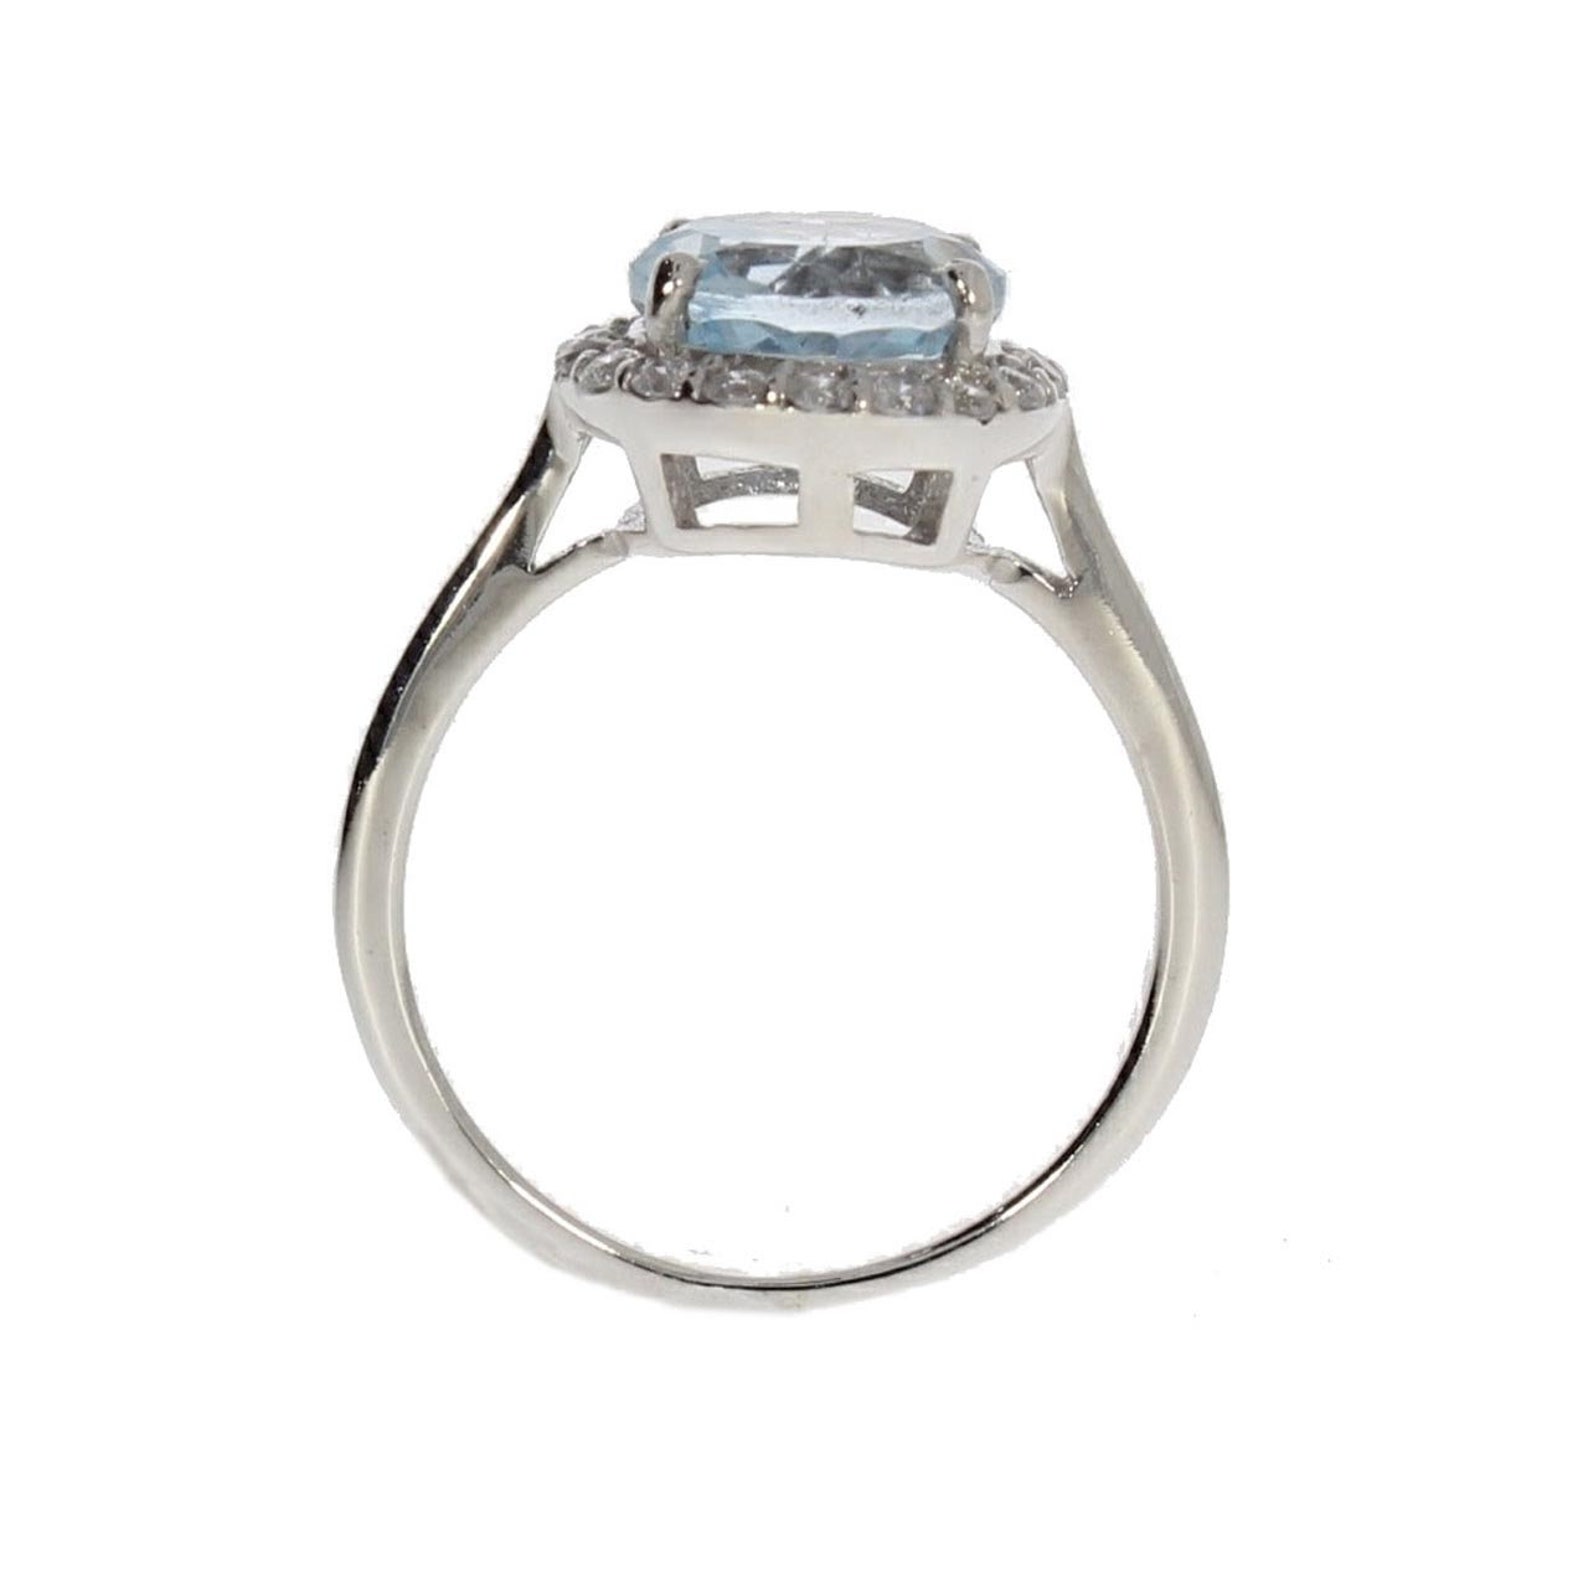 Aqua BT Ring Engagement Rings Silver Rings Sterling Silver - Etsy UK